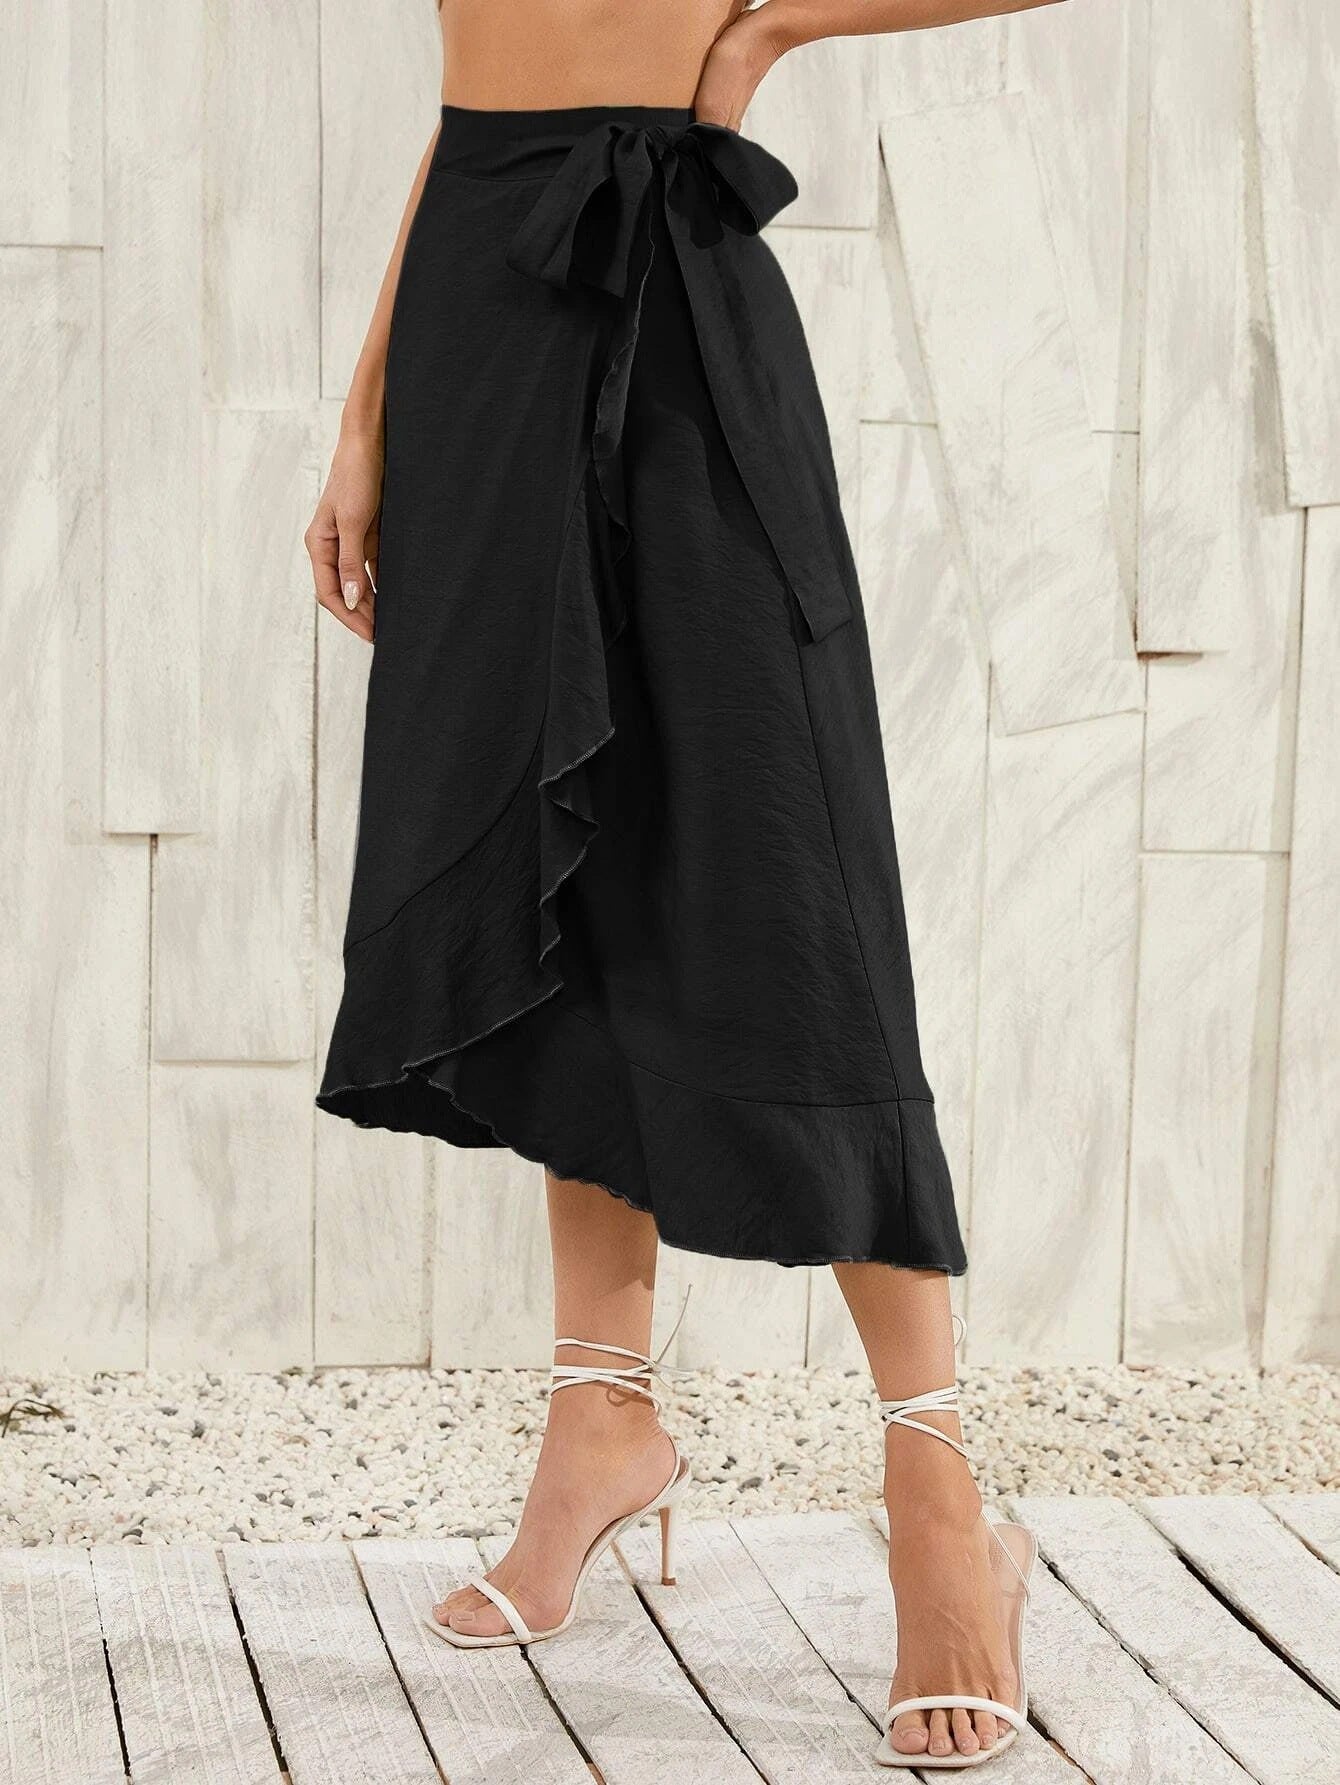 One-Piece Black Strappy Asymmetrical Long Skirt